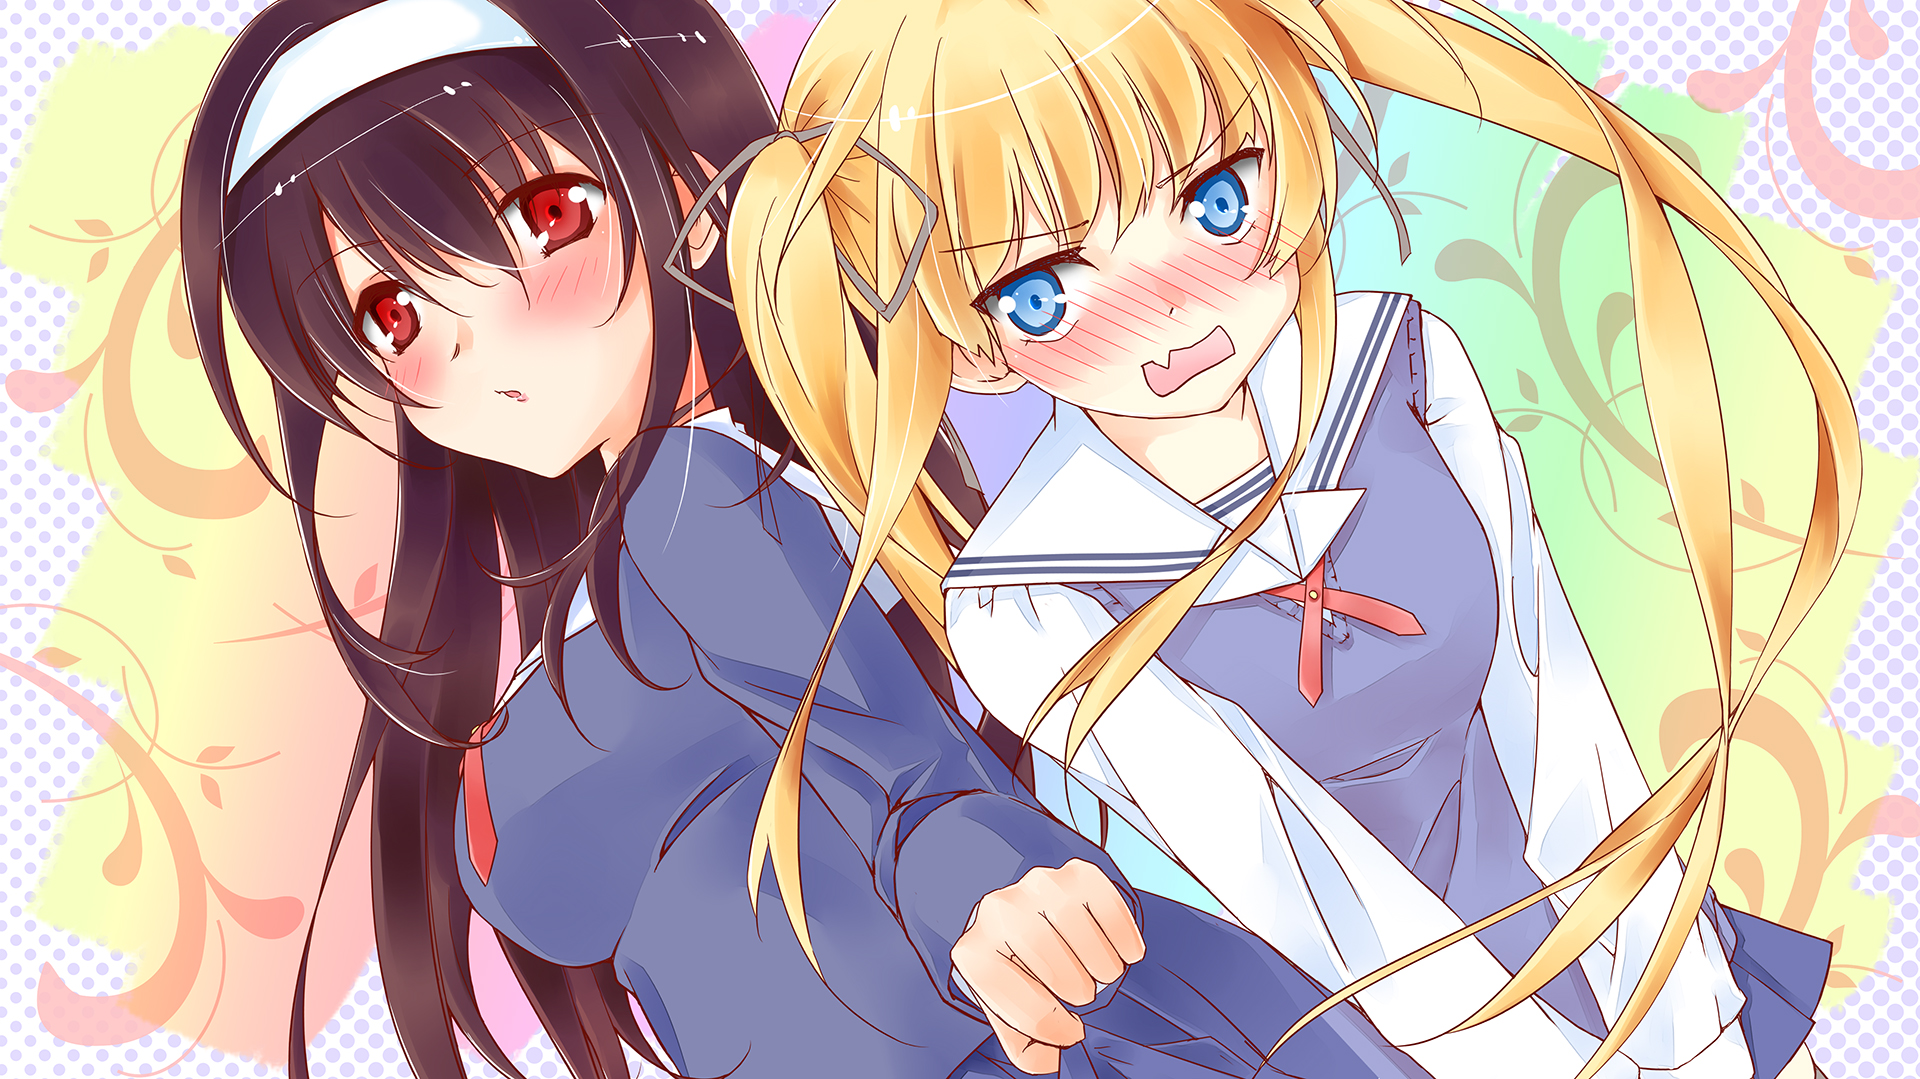 Blushing Kuudere Anime Girl